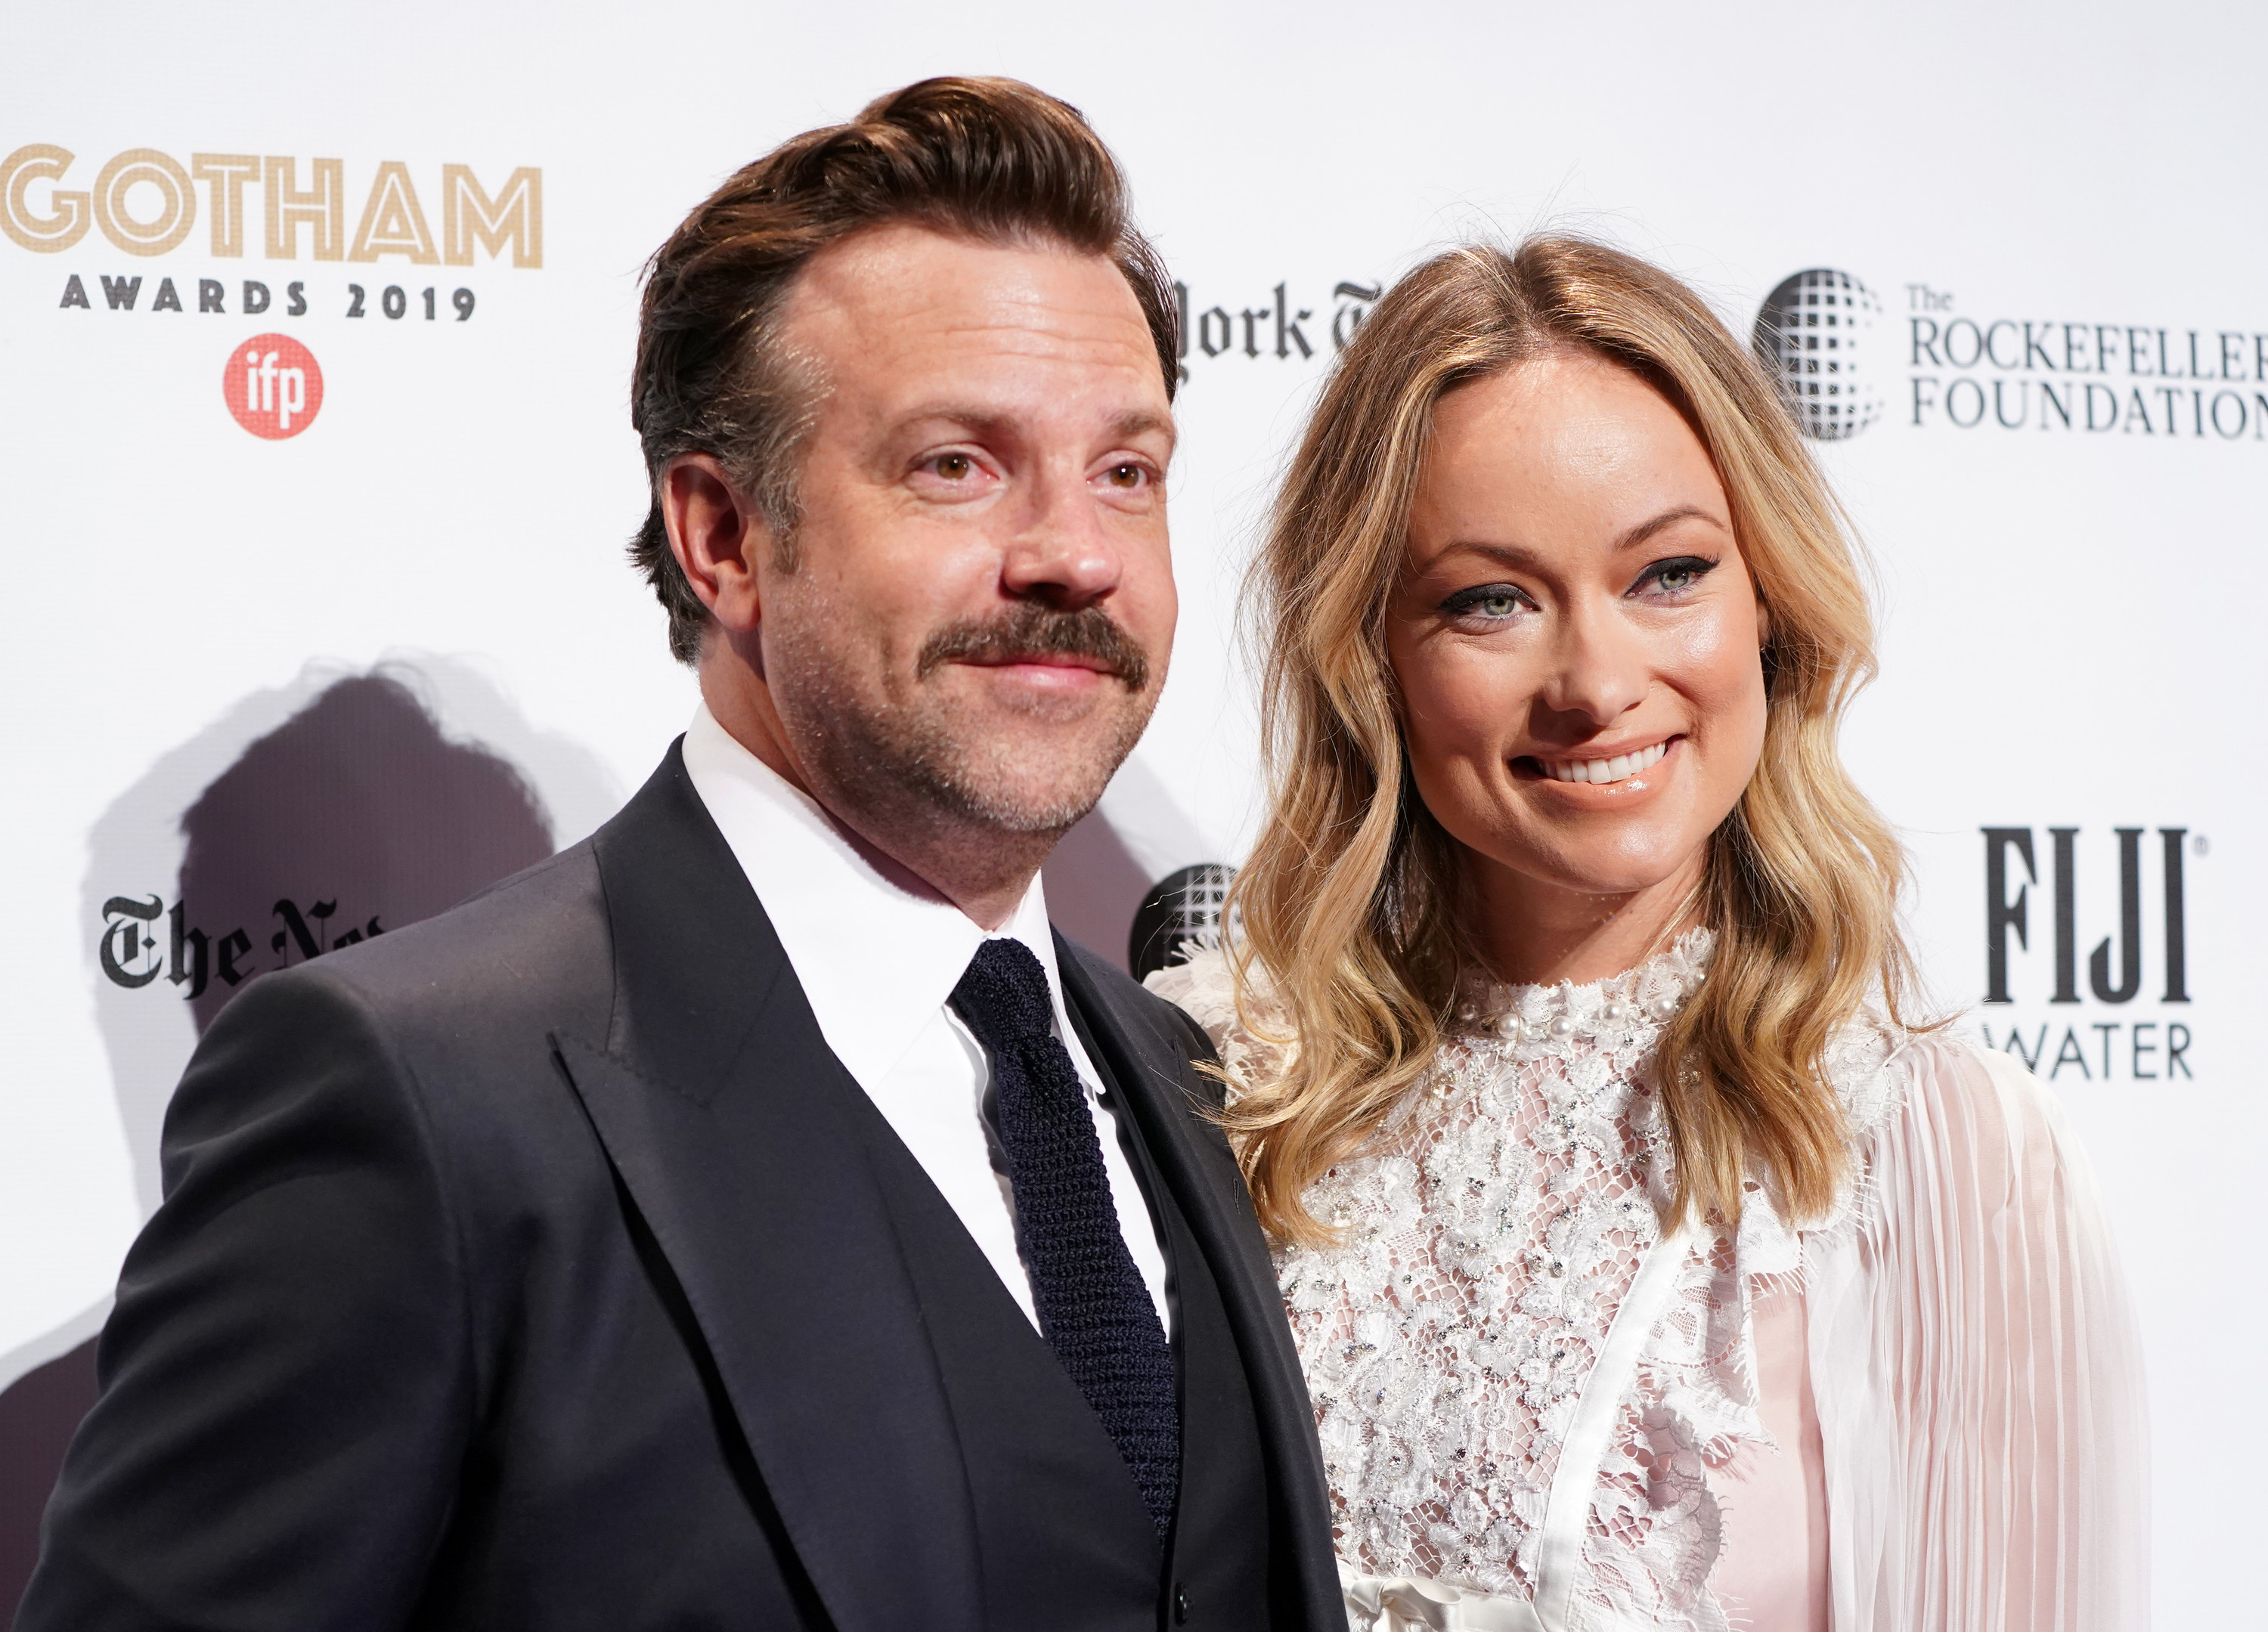 Jason and Olivia pose together at the 2019 Gotham Awards